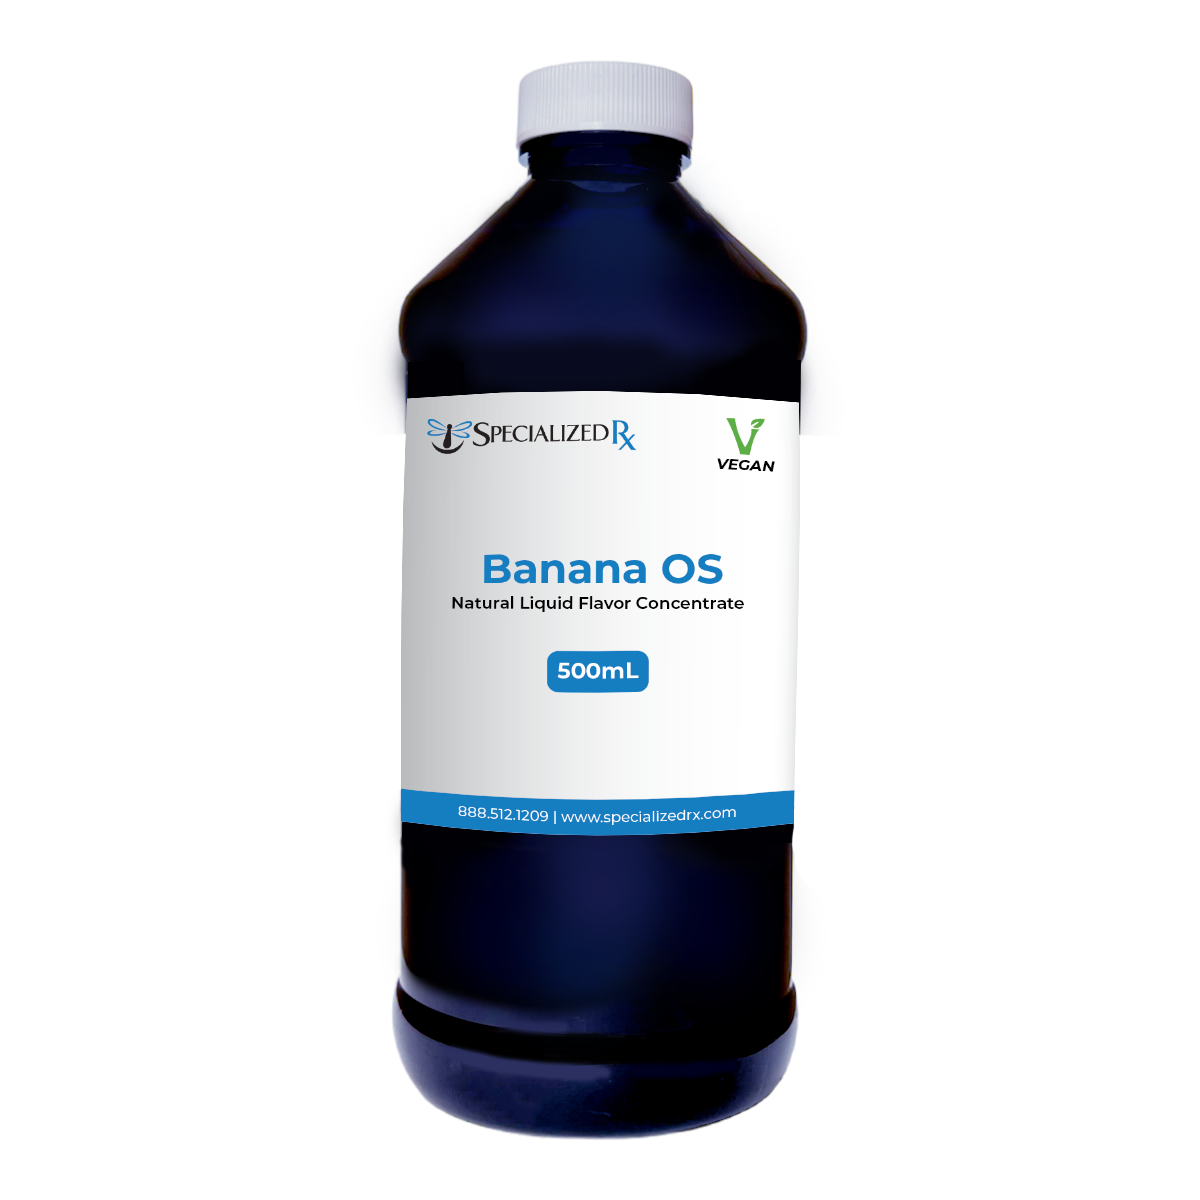 Banana OS Natural Liquid Flavor Concentrate